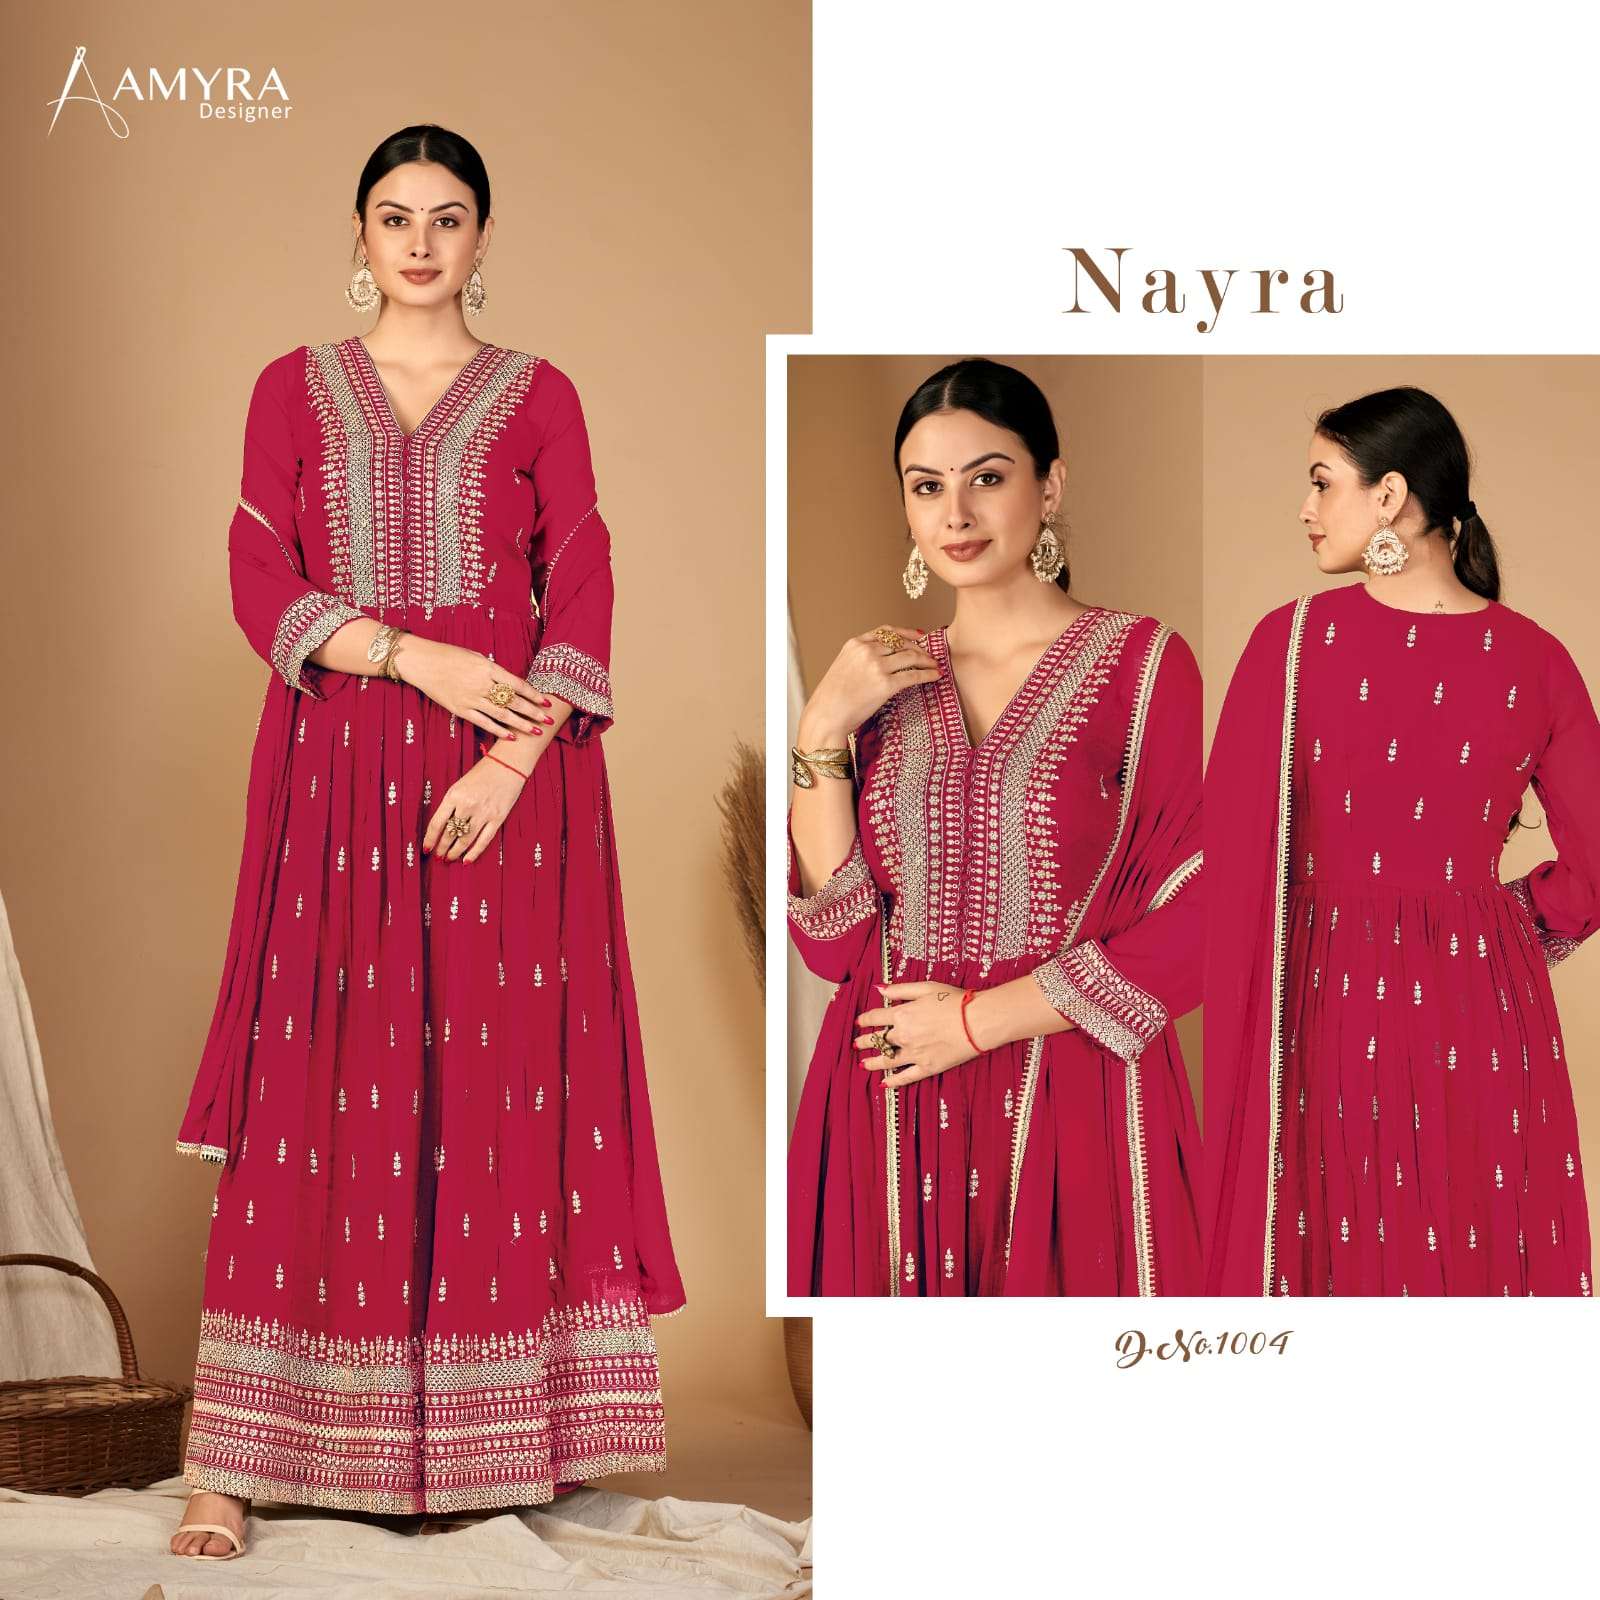 aamyra designer nayra 1001-1004 series georgette embroidered designer suits collection surat